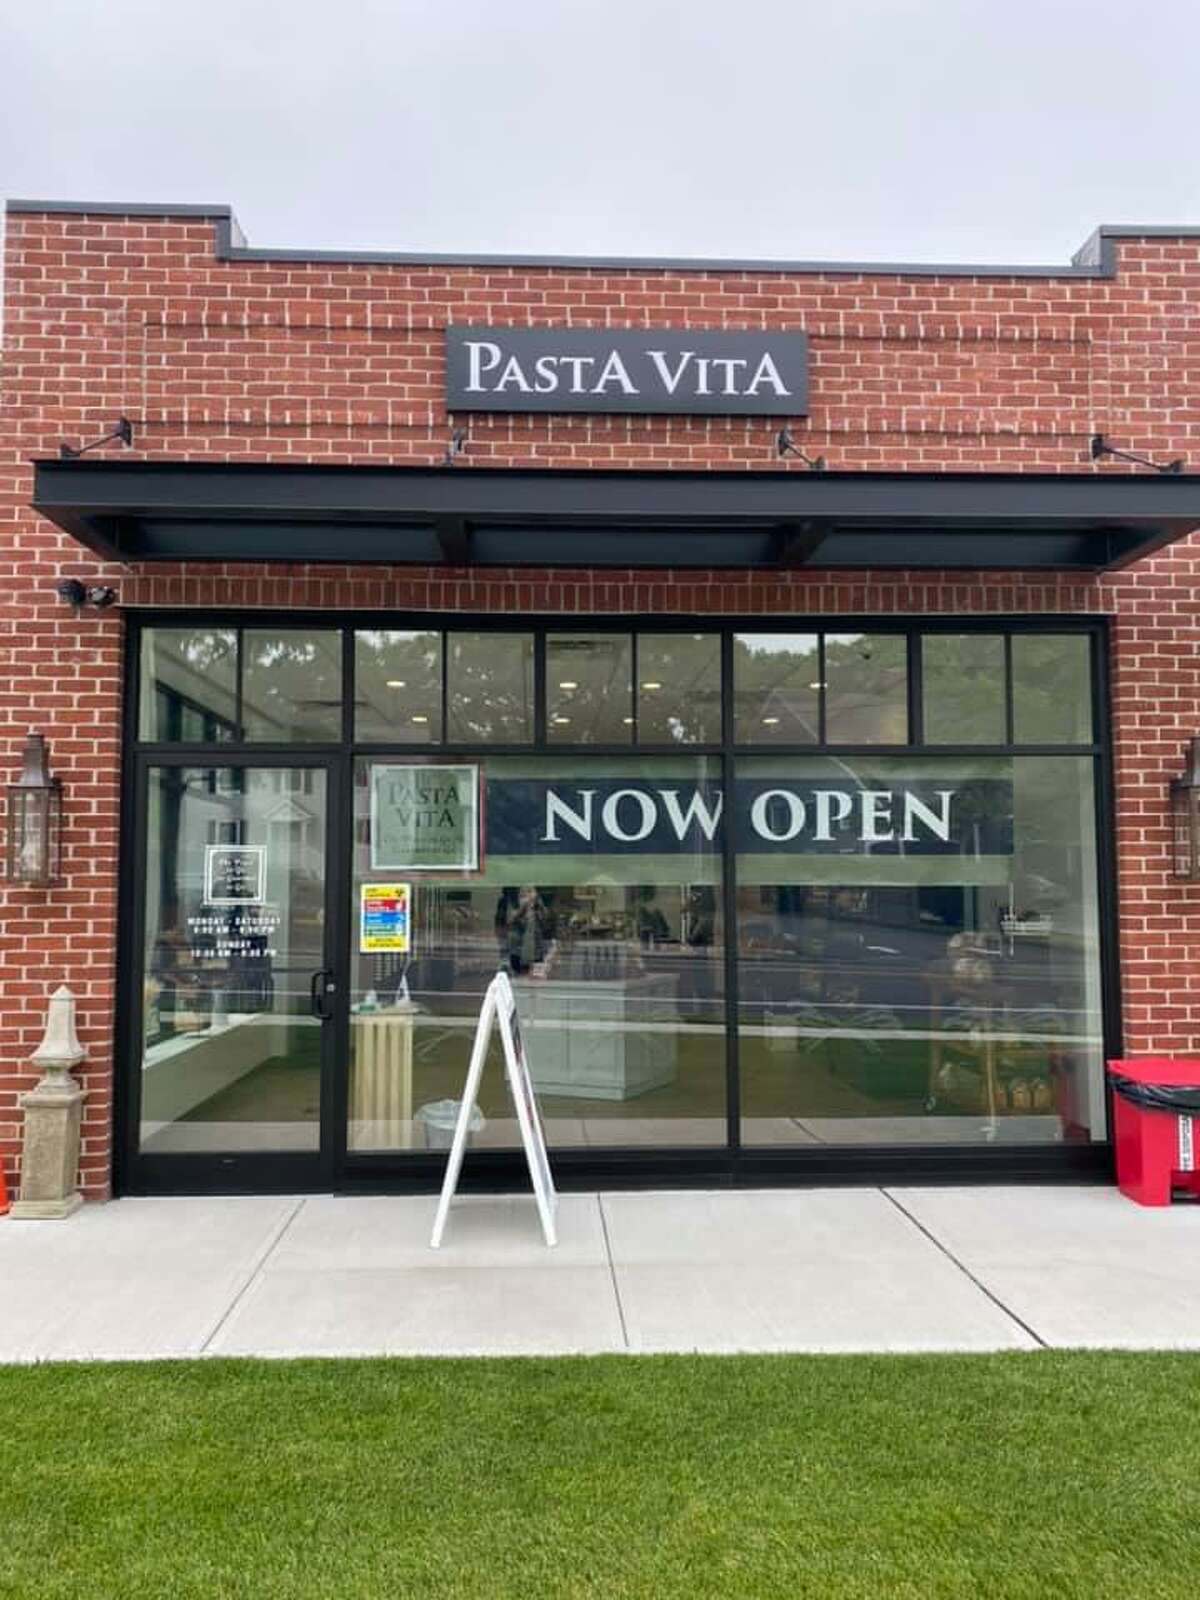 Pasta Vita in Darien opened Tuesday, July 7.